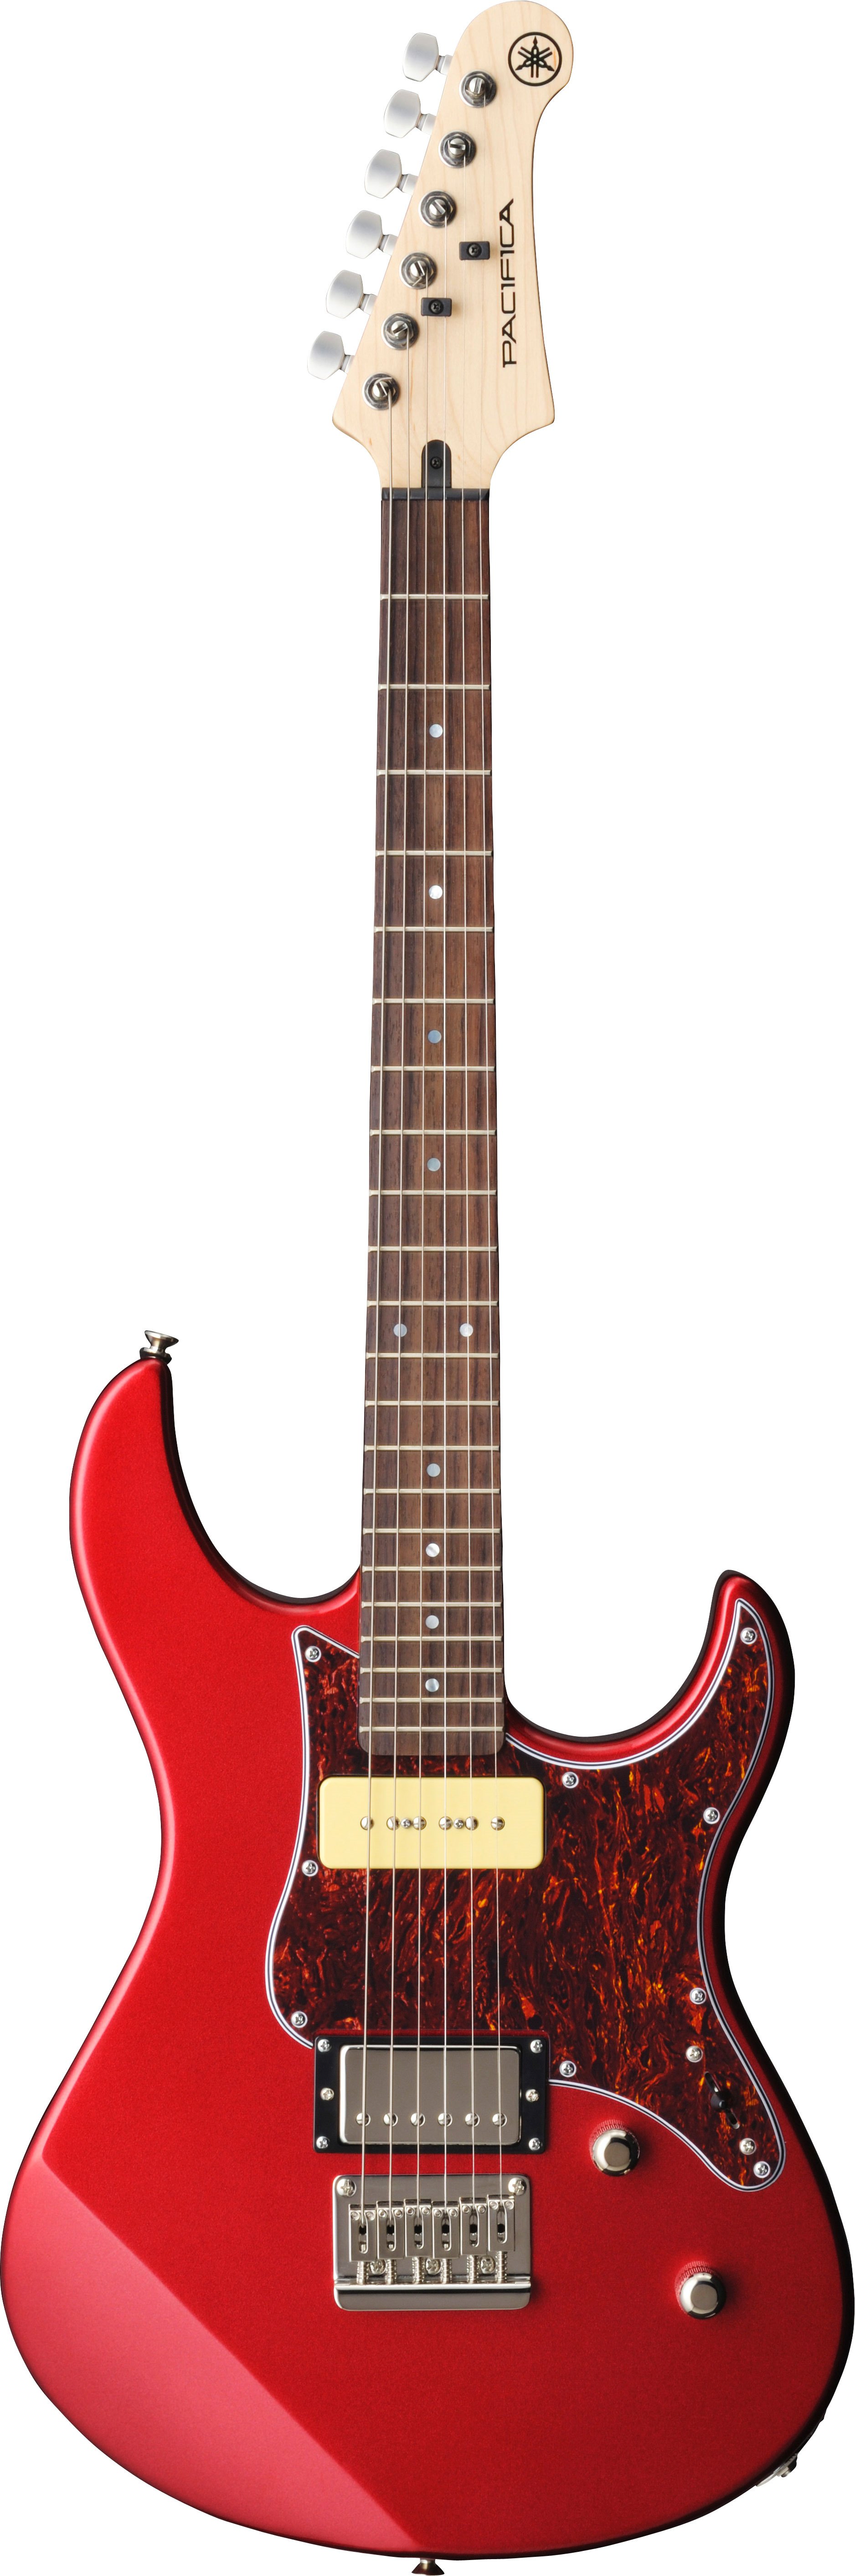 PAC300 Pacifica Electric Guitars - Yamaha USA